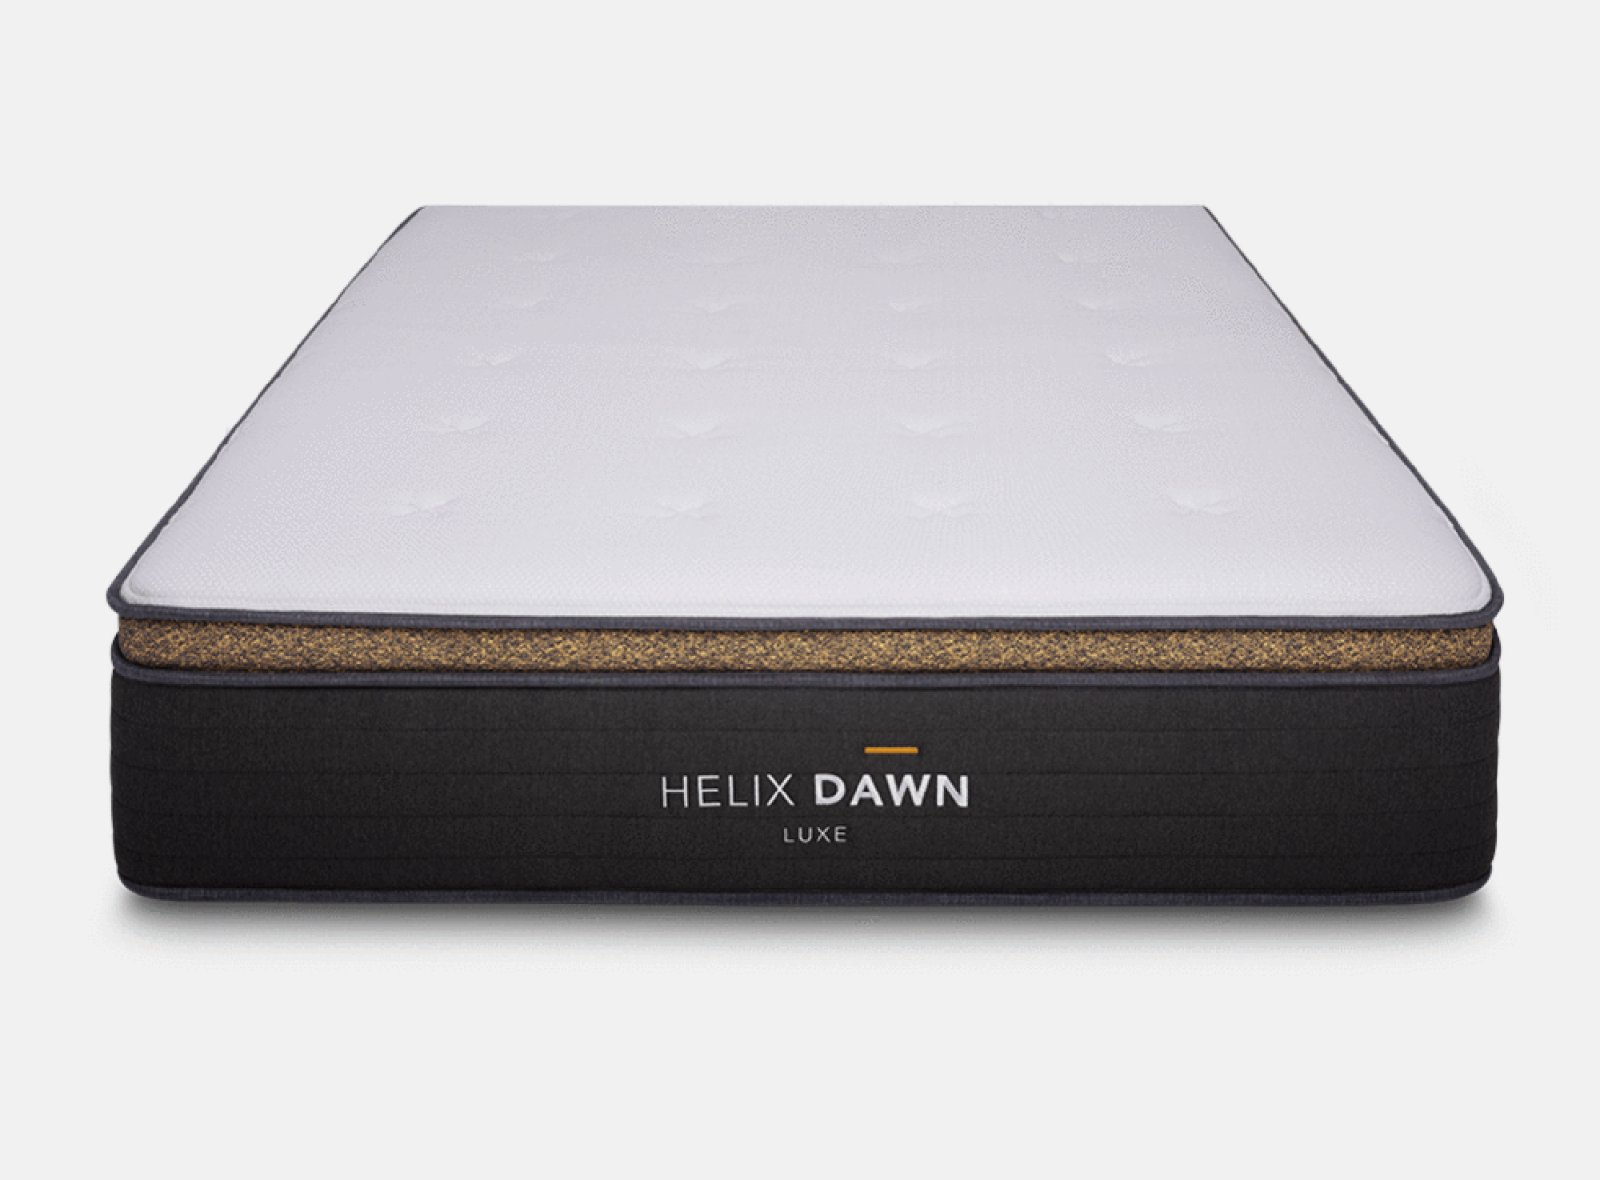 helix dawn mattress review reddit